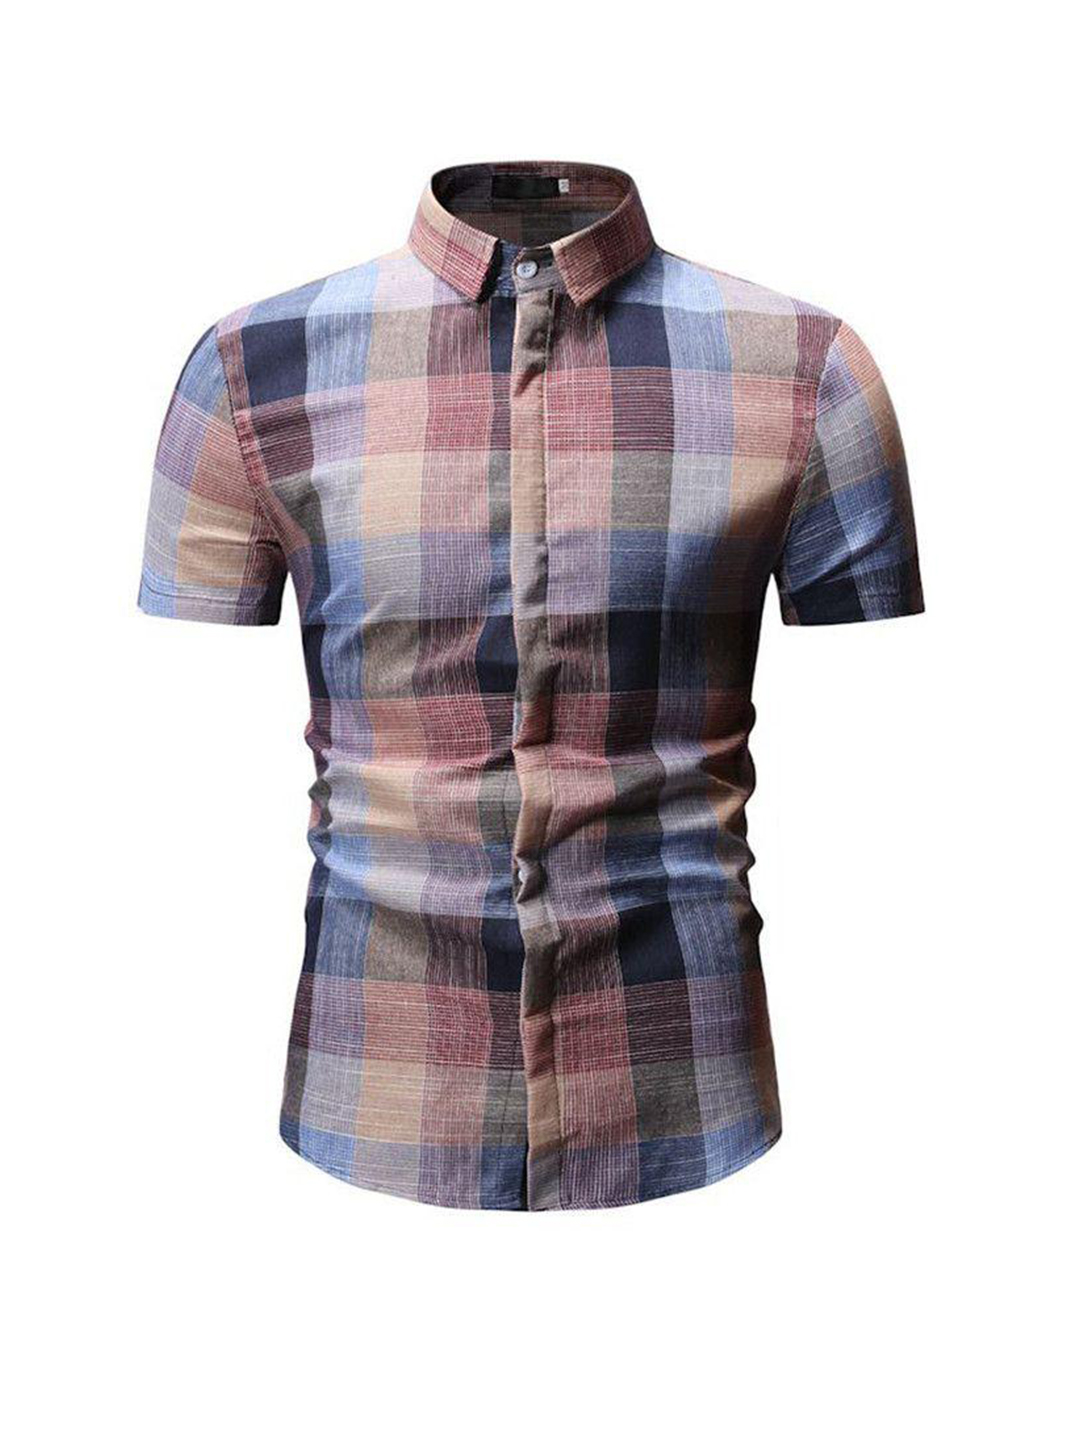 Geoffrey Multicolored Check Short Sleeve Shirt